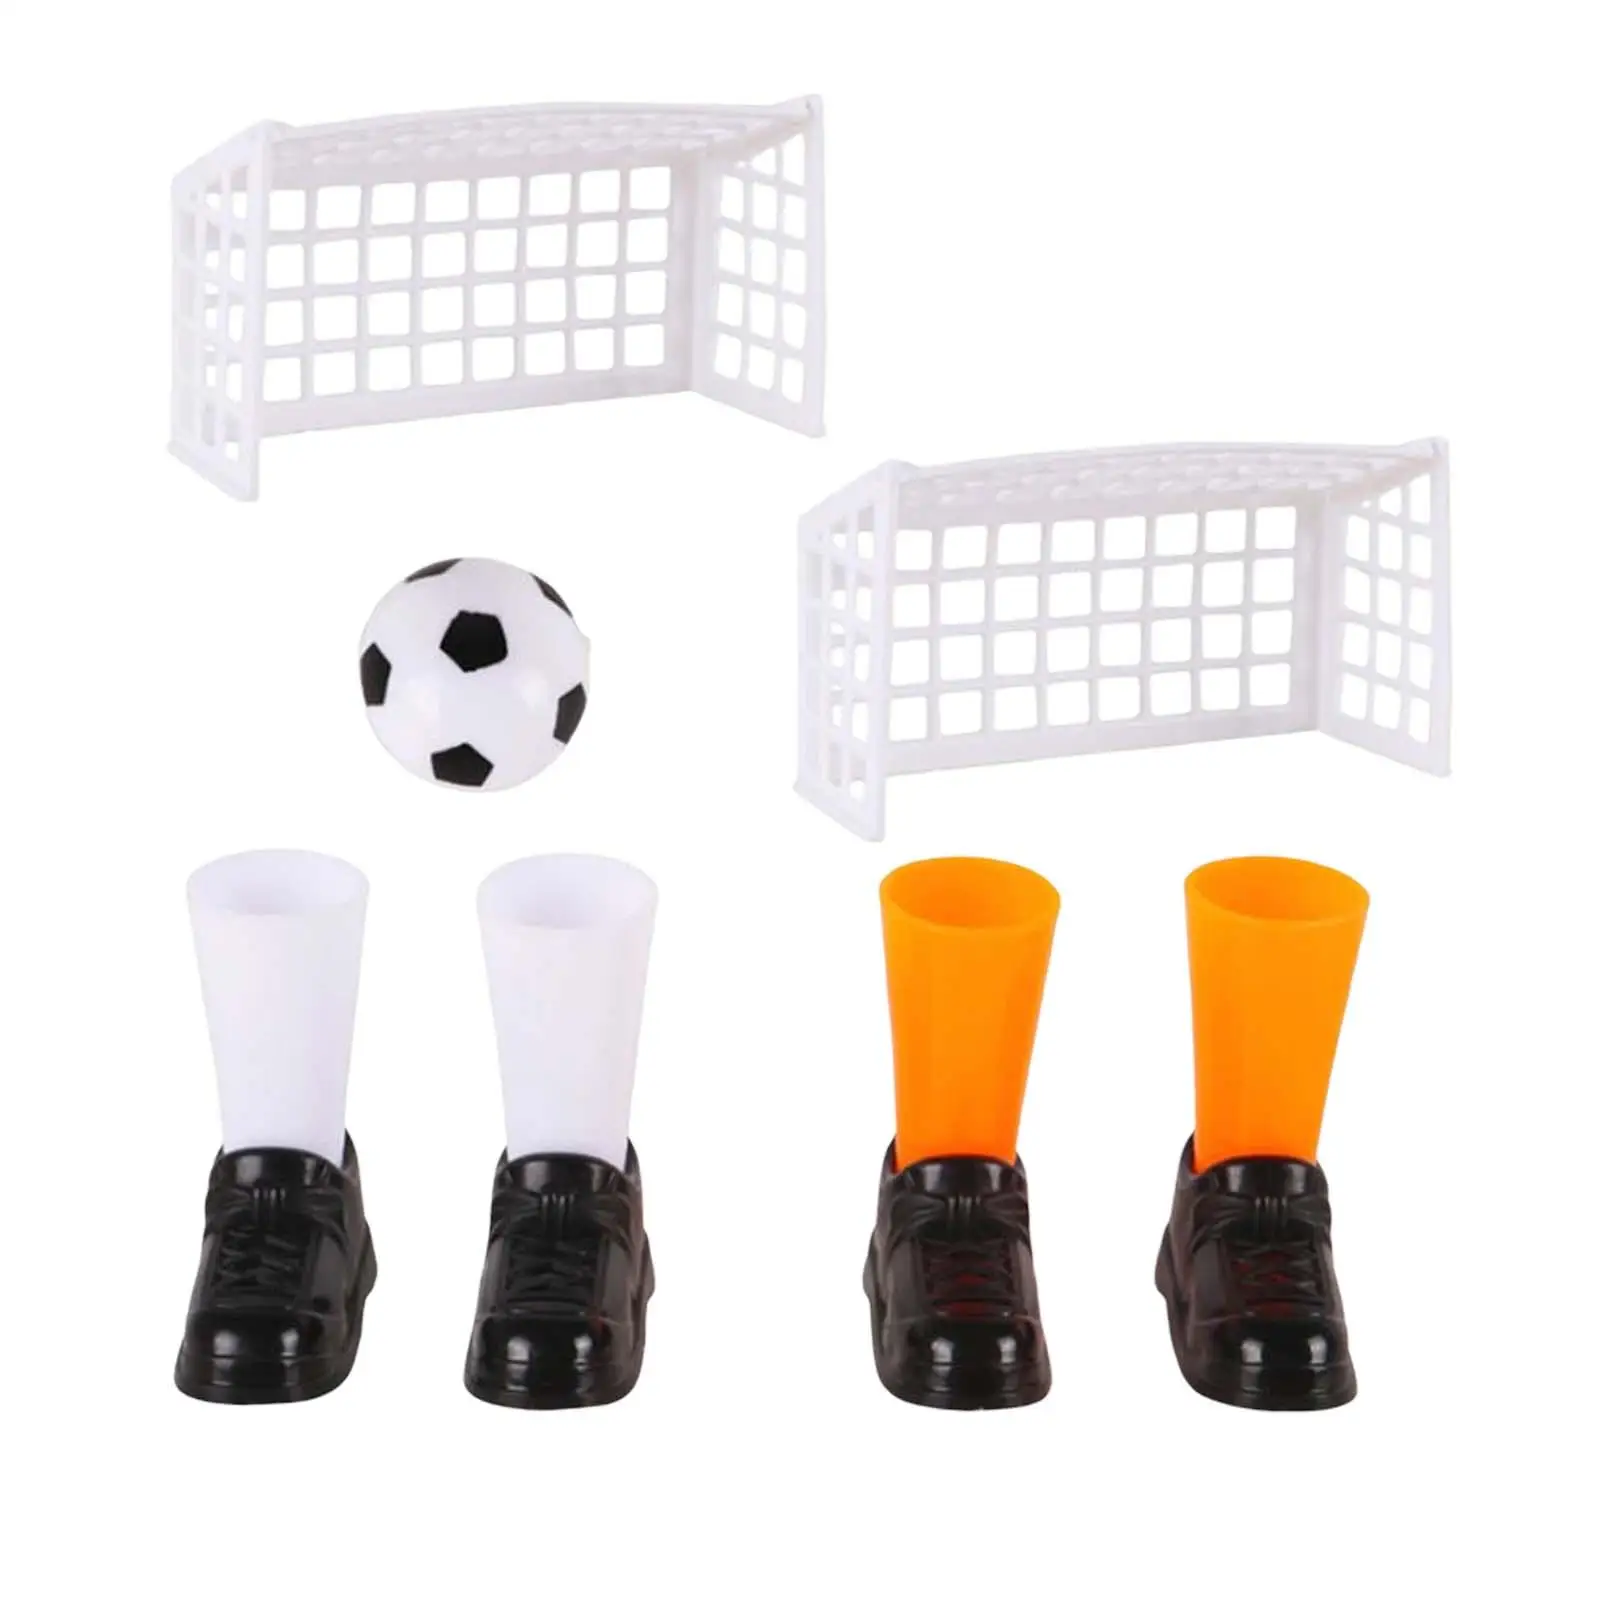 Interactive Finger Football Games Desktop Football Board Games Kit for Girls Kids